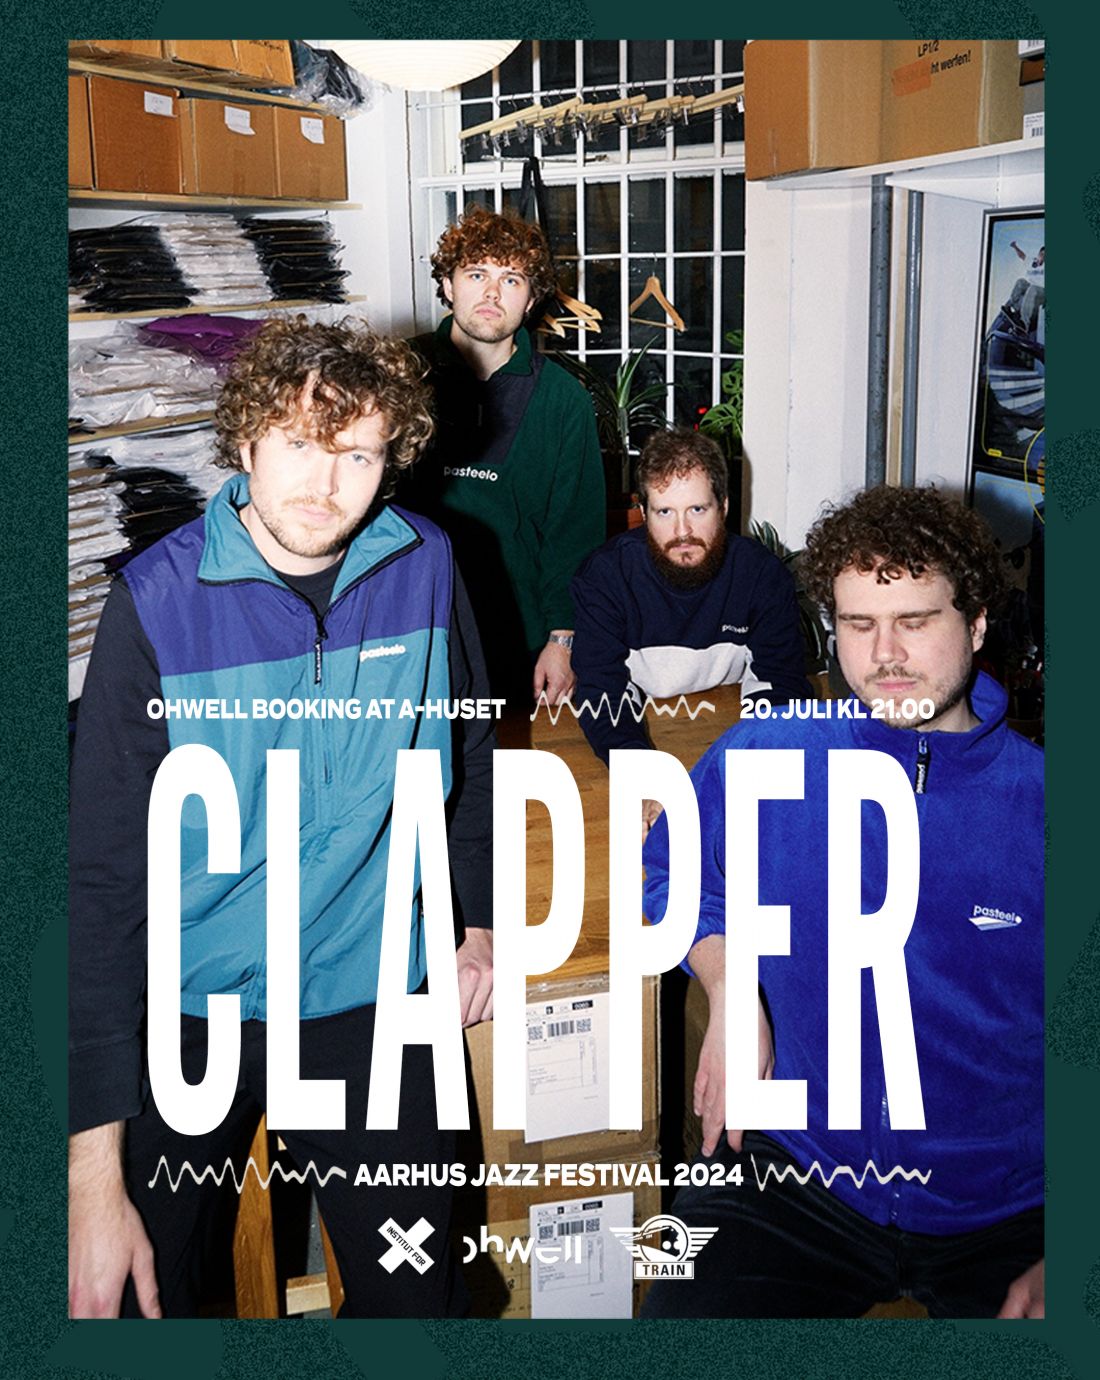 Clapper (DK) - Photo: Institut for (X)